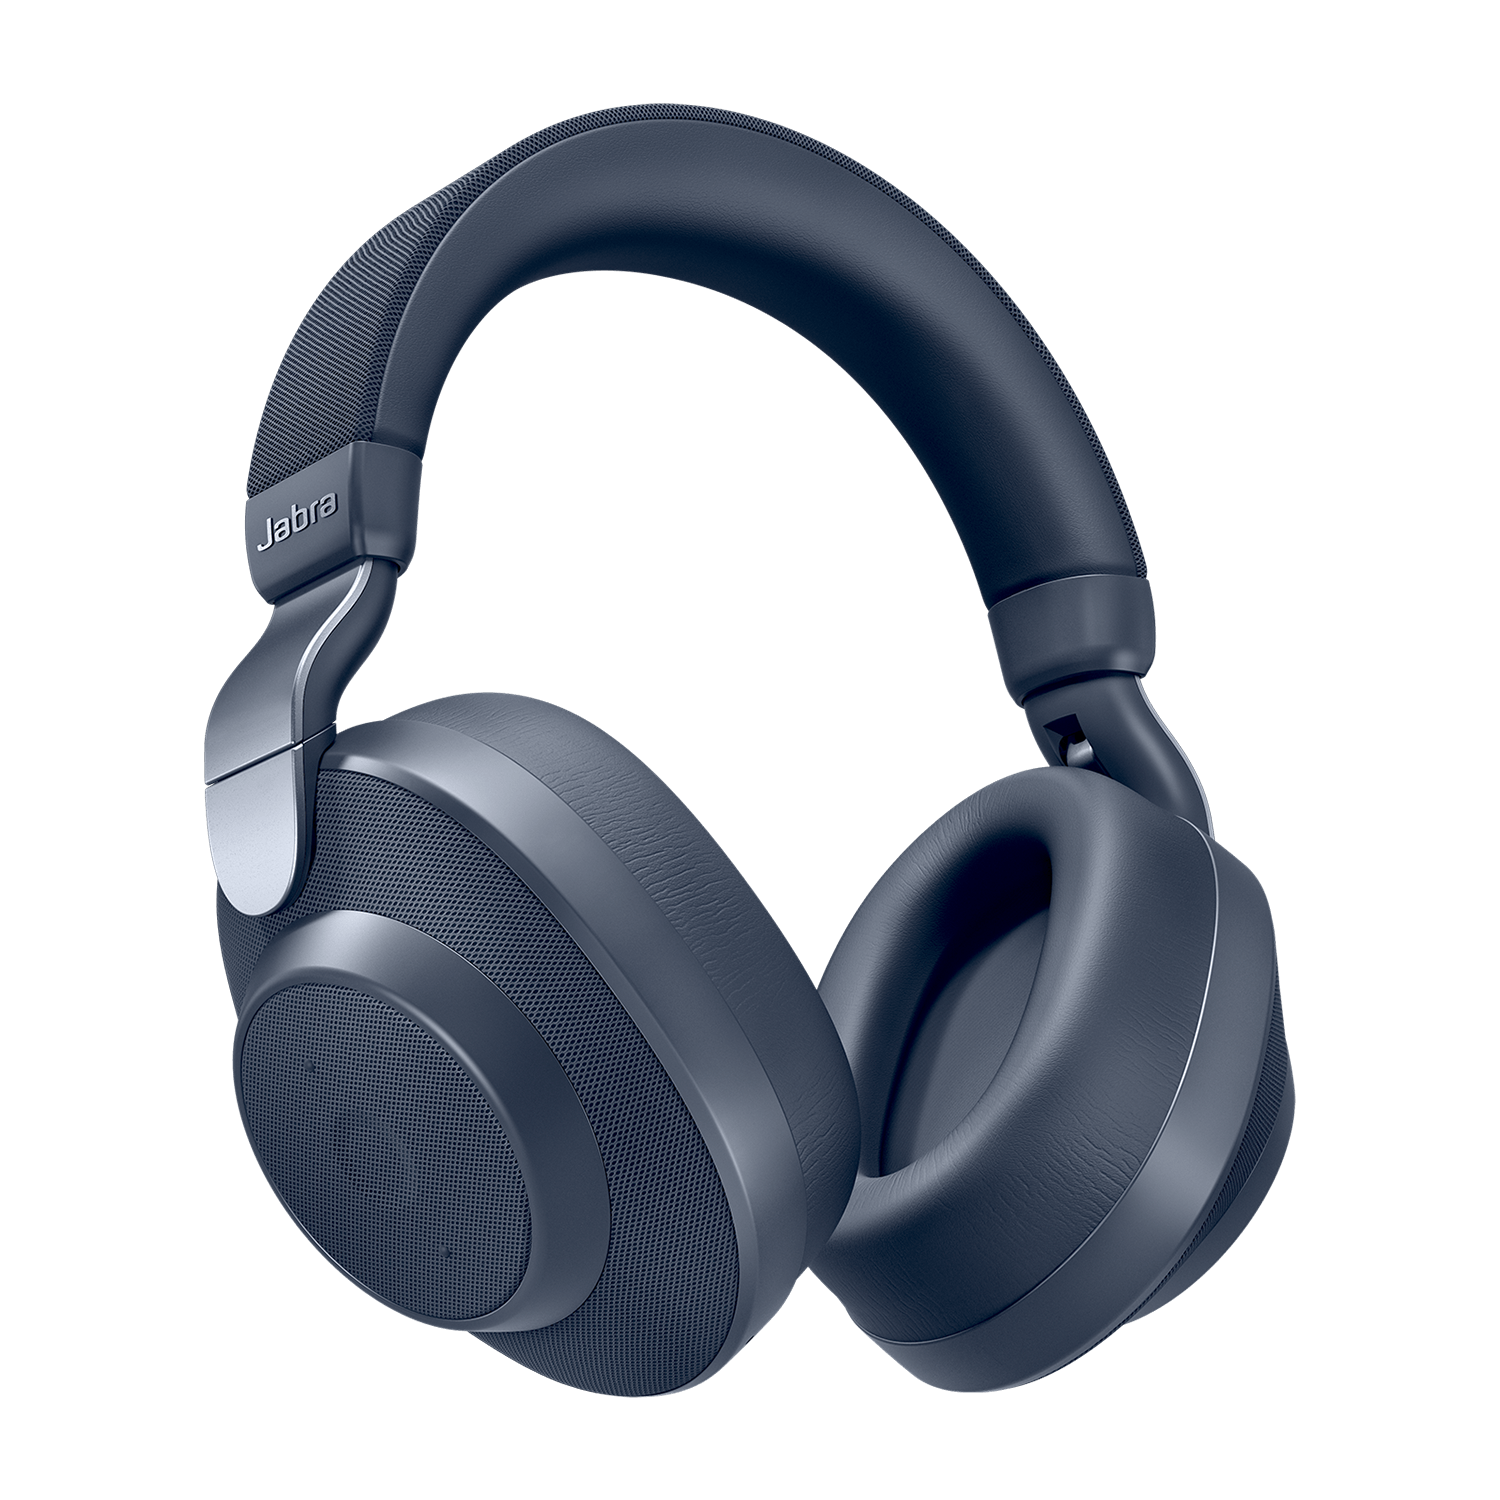 Uitsluiting Rode datum kaas Wireless noise cancelling headphones with SmartSound | Jabra Elite 85h